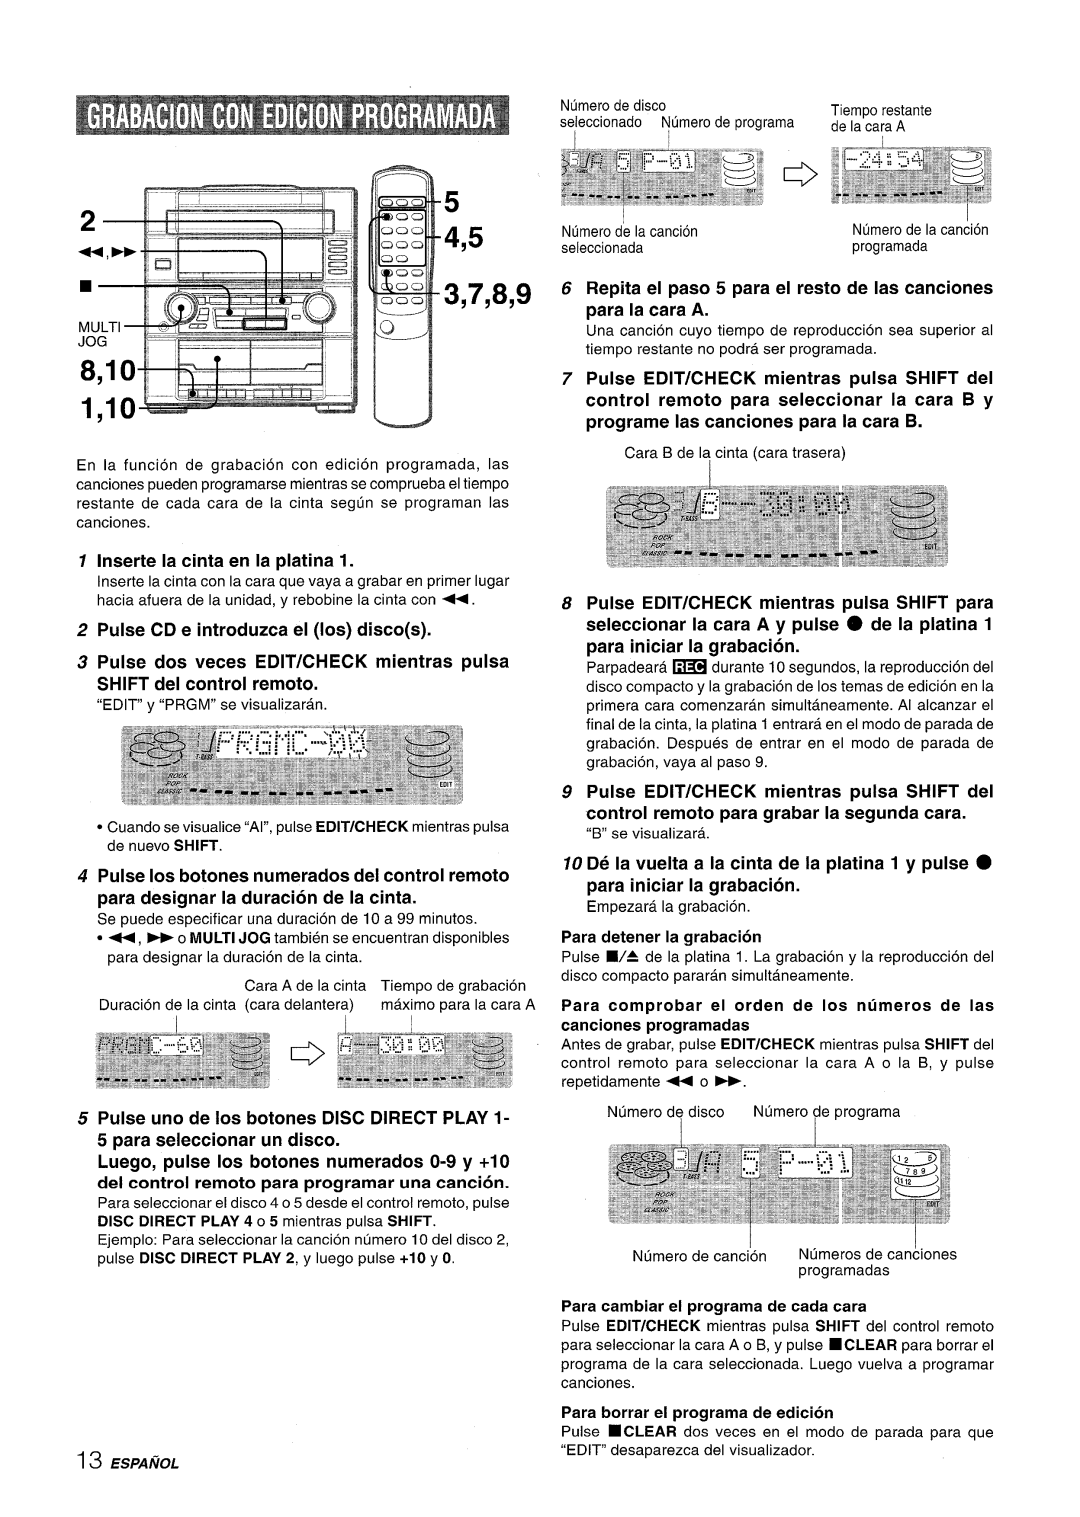 Aiwa Z-R555 manual 8,10, Pulse EDIT/CHECK mientras pulsa SHIFT del, Pulse CD e introduzca el Ios discos 